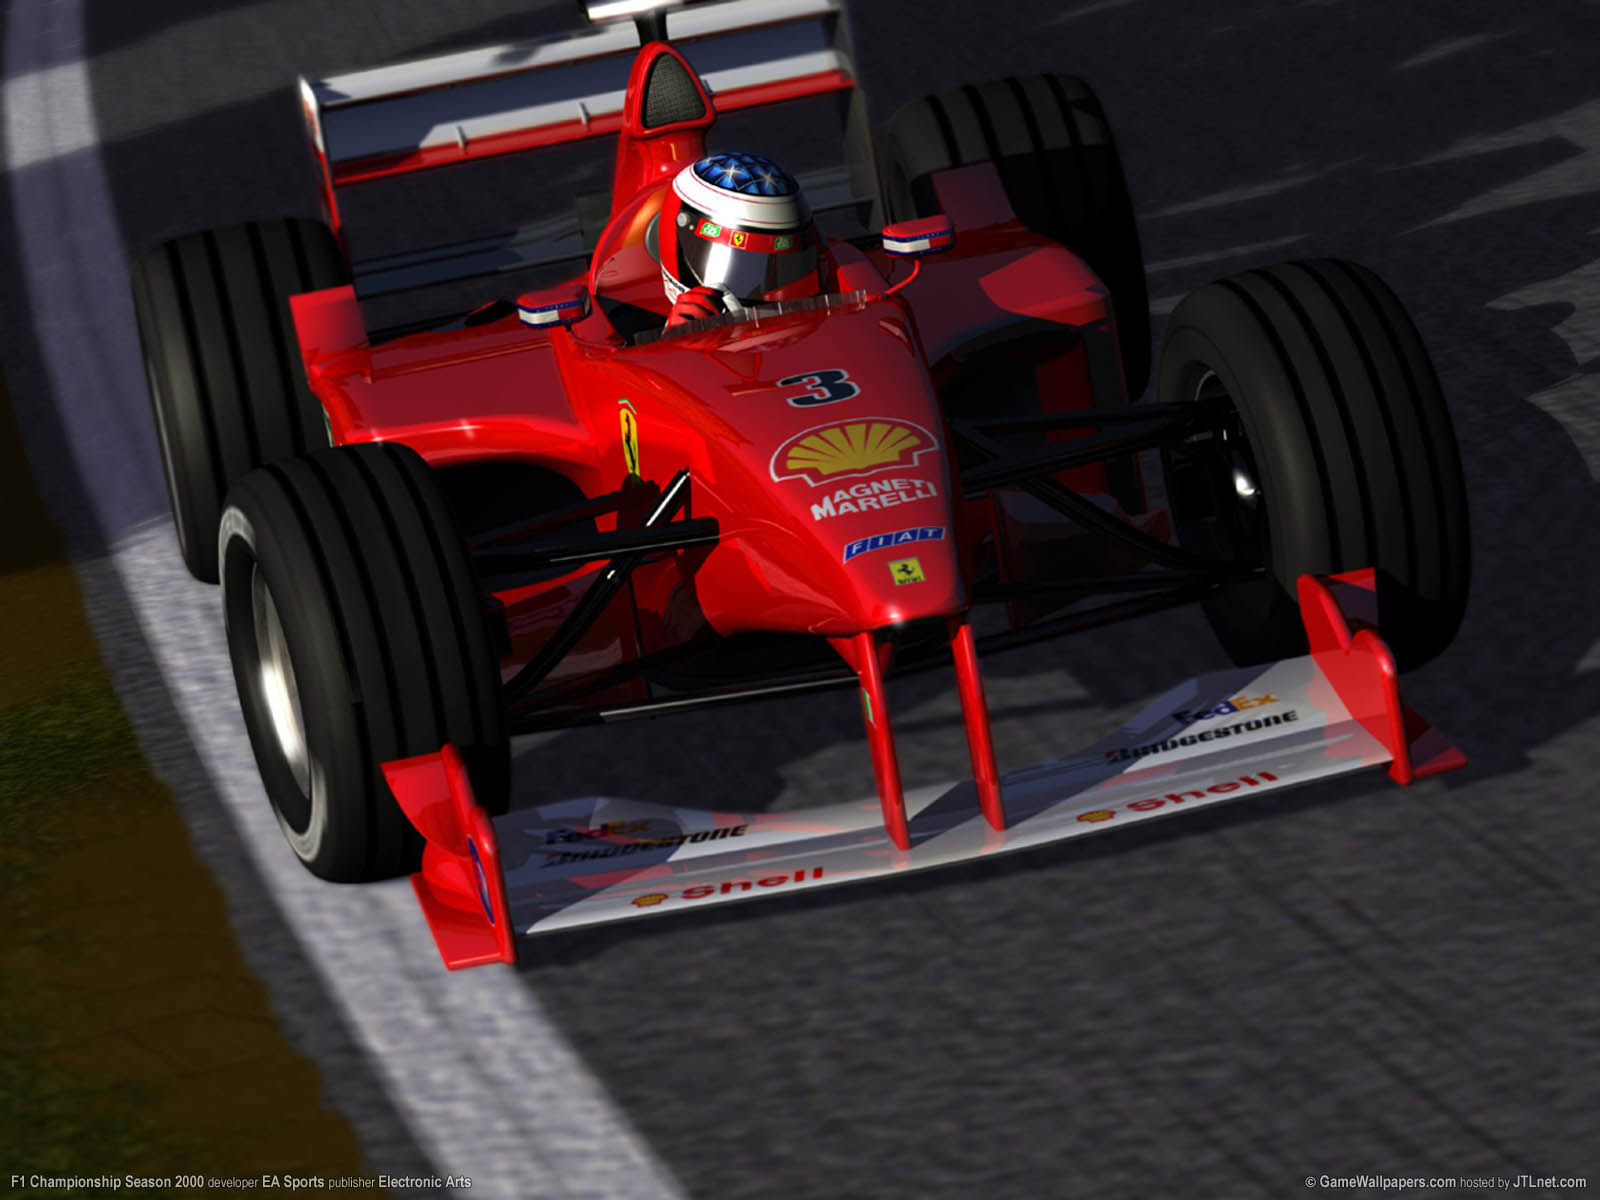 F1 Championship Season 2000 achtergrond 03 1600x1200